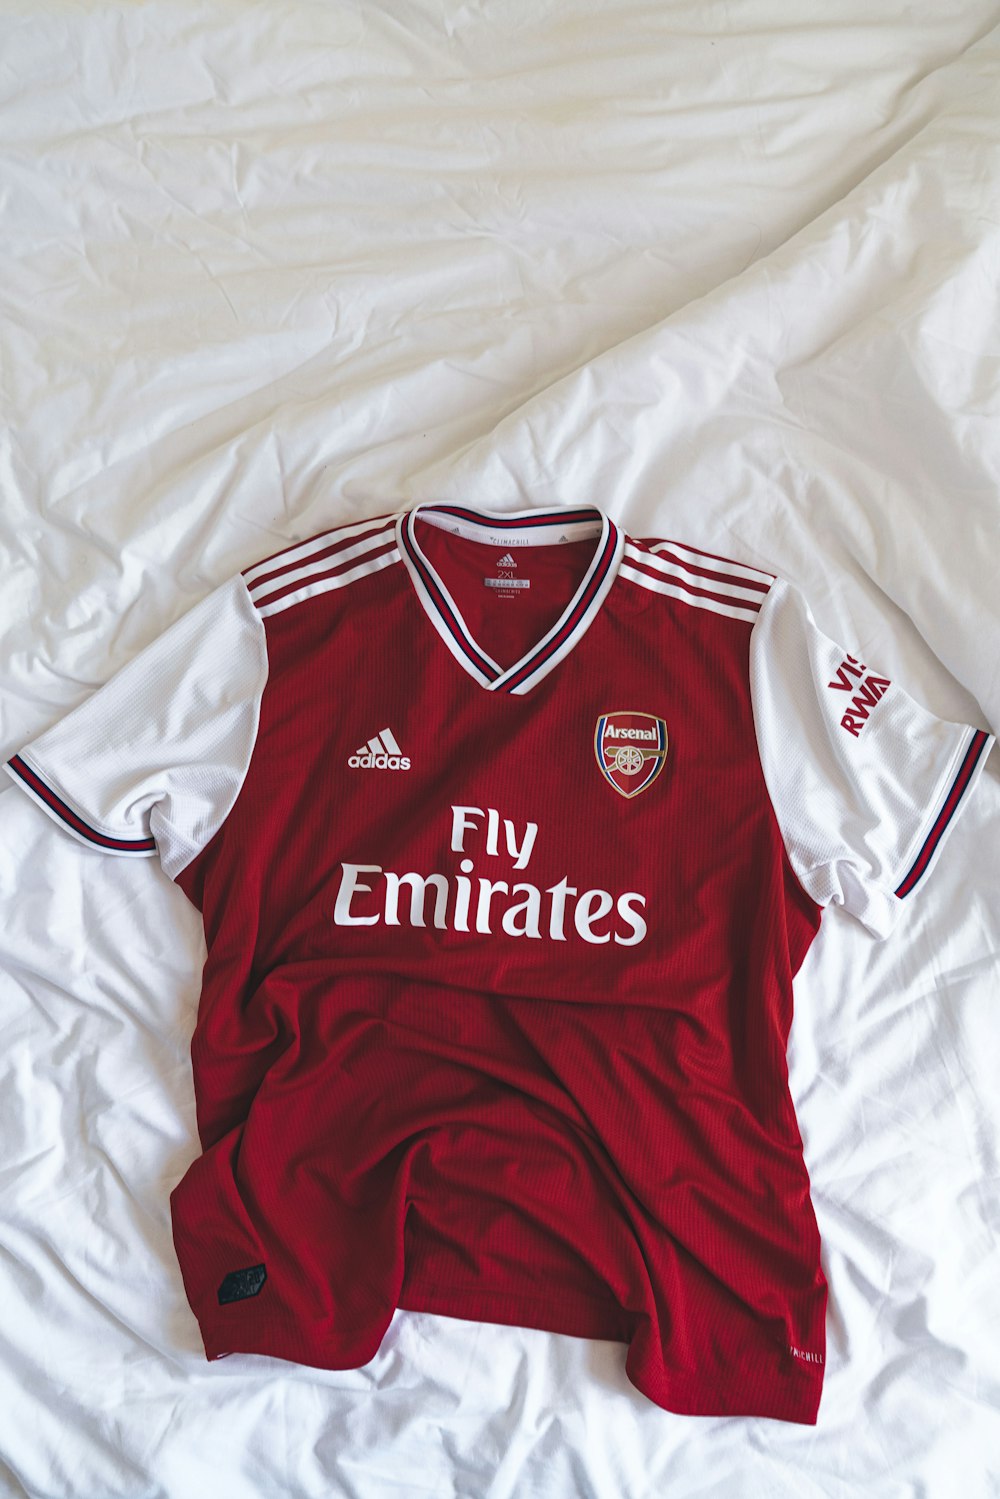 red and white Adidas Fly Emirates shirt photo – Free Arsenal Image ...